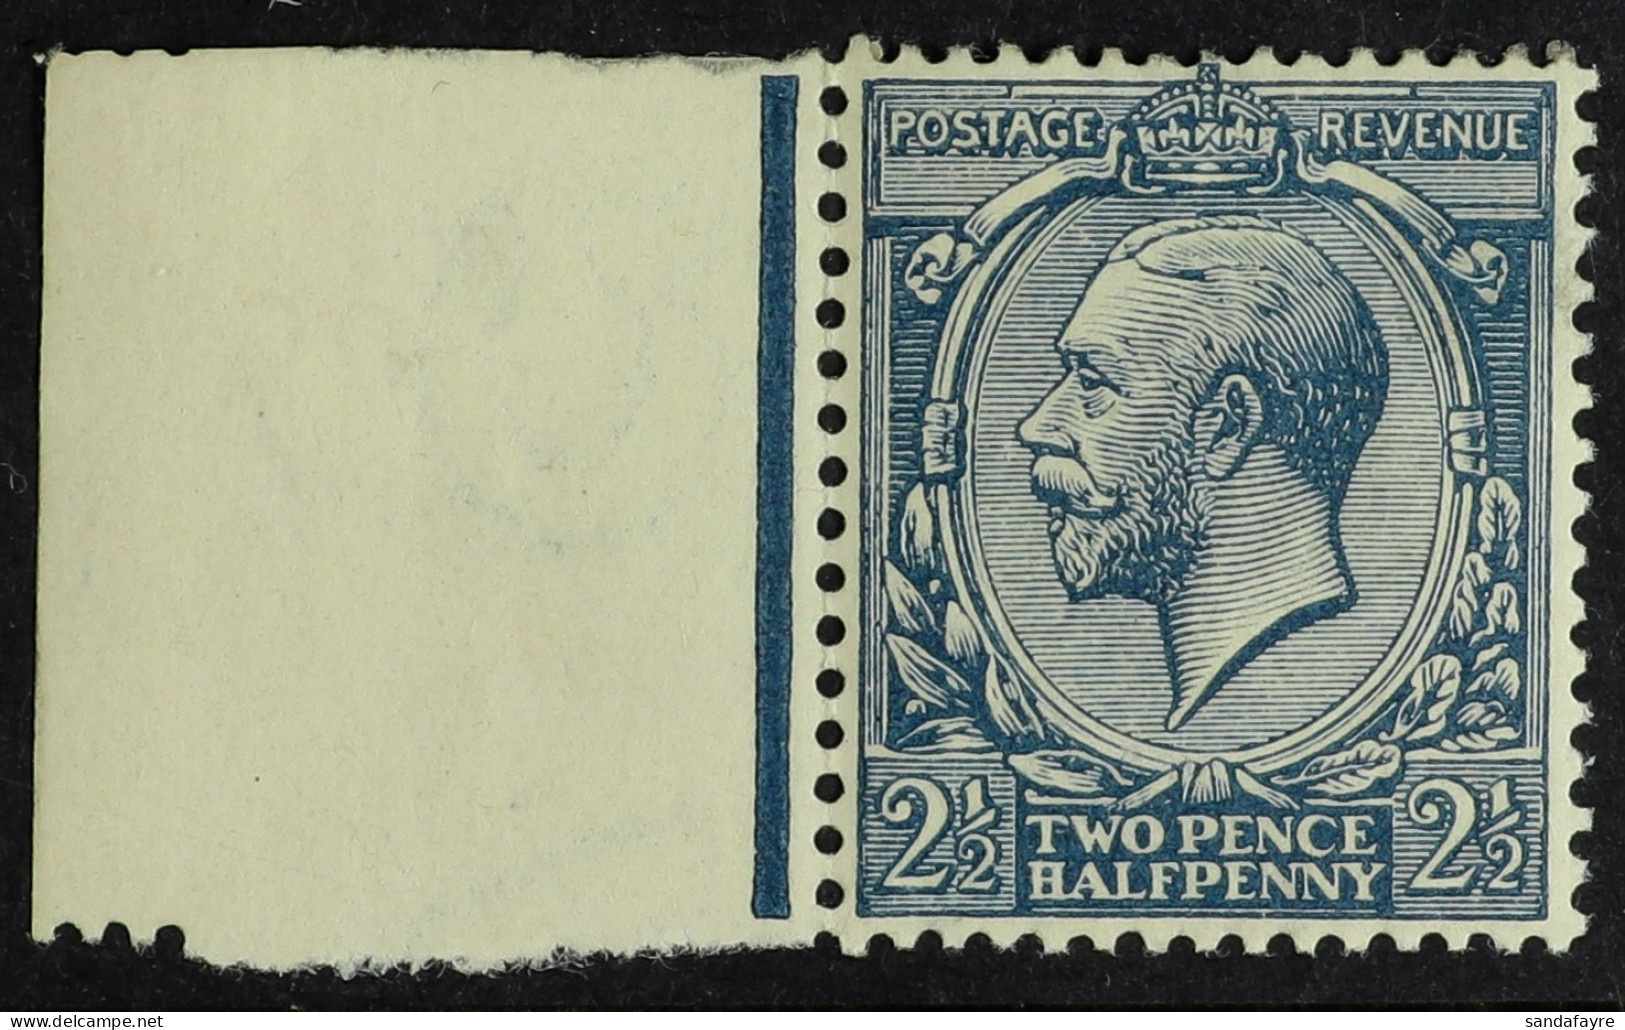 1912-24 2Â½d Dull Prussian Blue Wmk Cypher, Spec N21(17), Never Hinged Mint With Sheet Margin At Left, Slight Bend, Copy - Non Classés